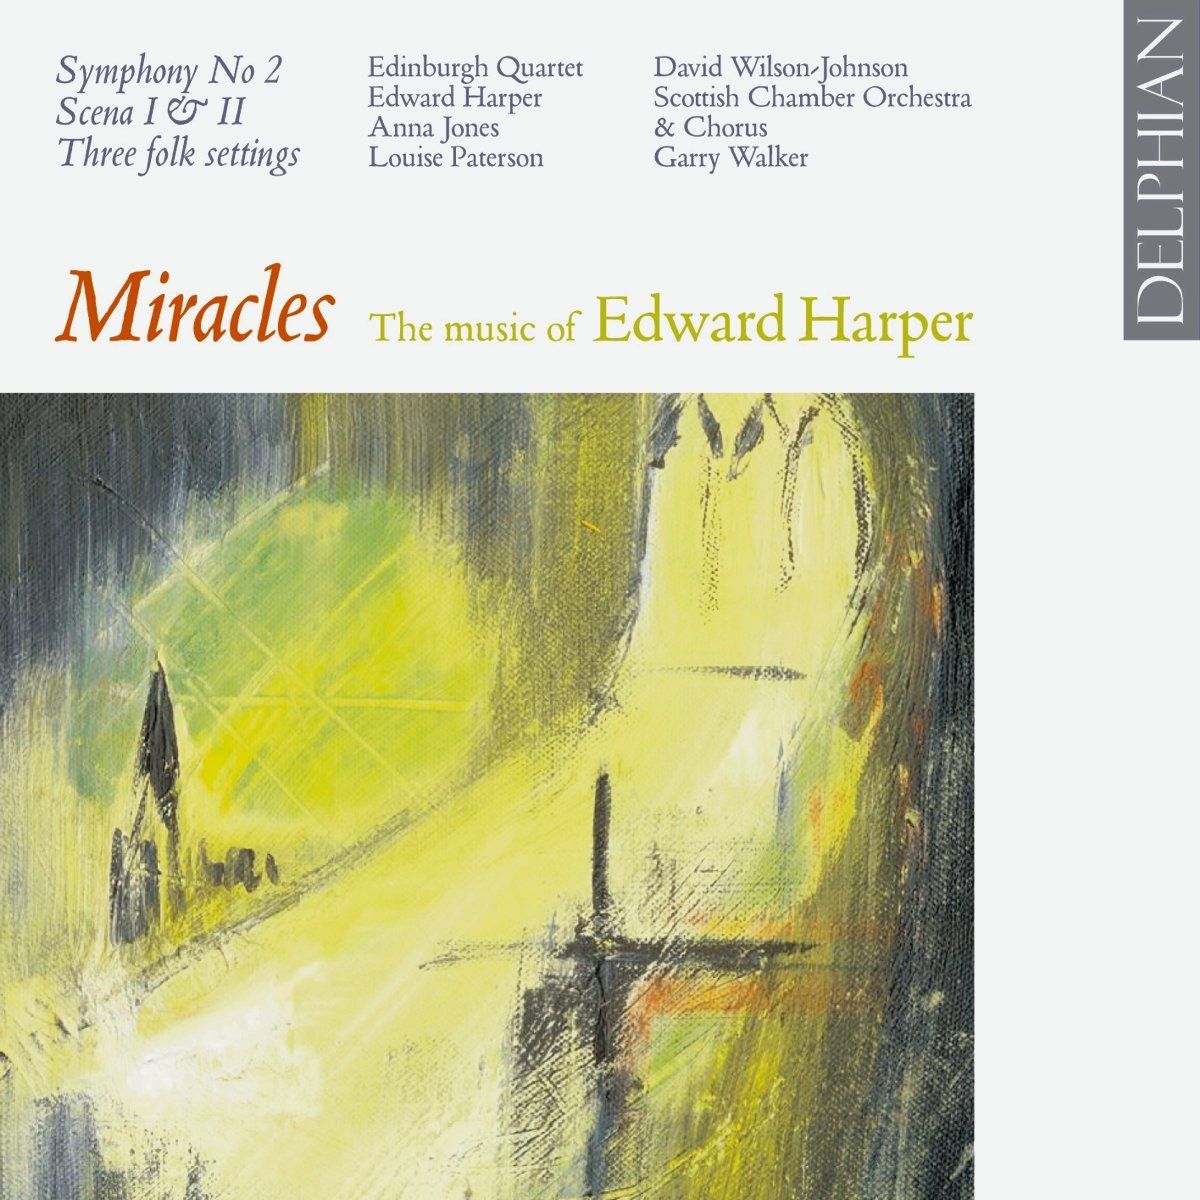 Miracles: The music of Edward Harper CD Delphian Records